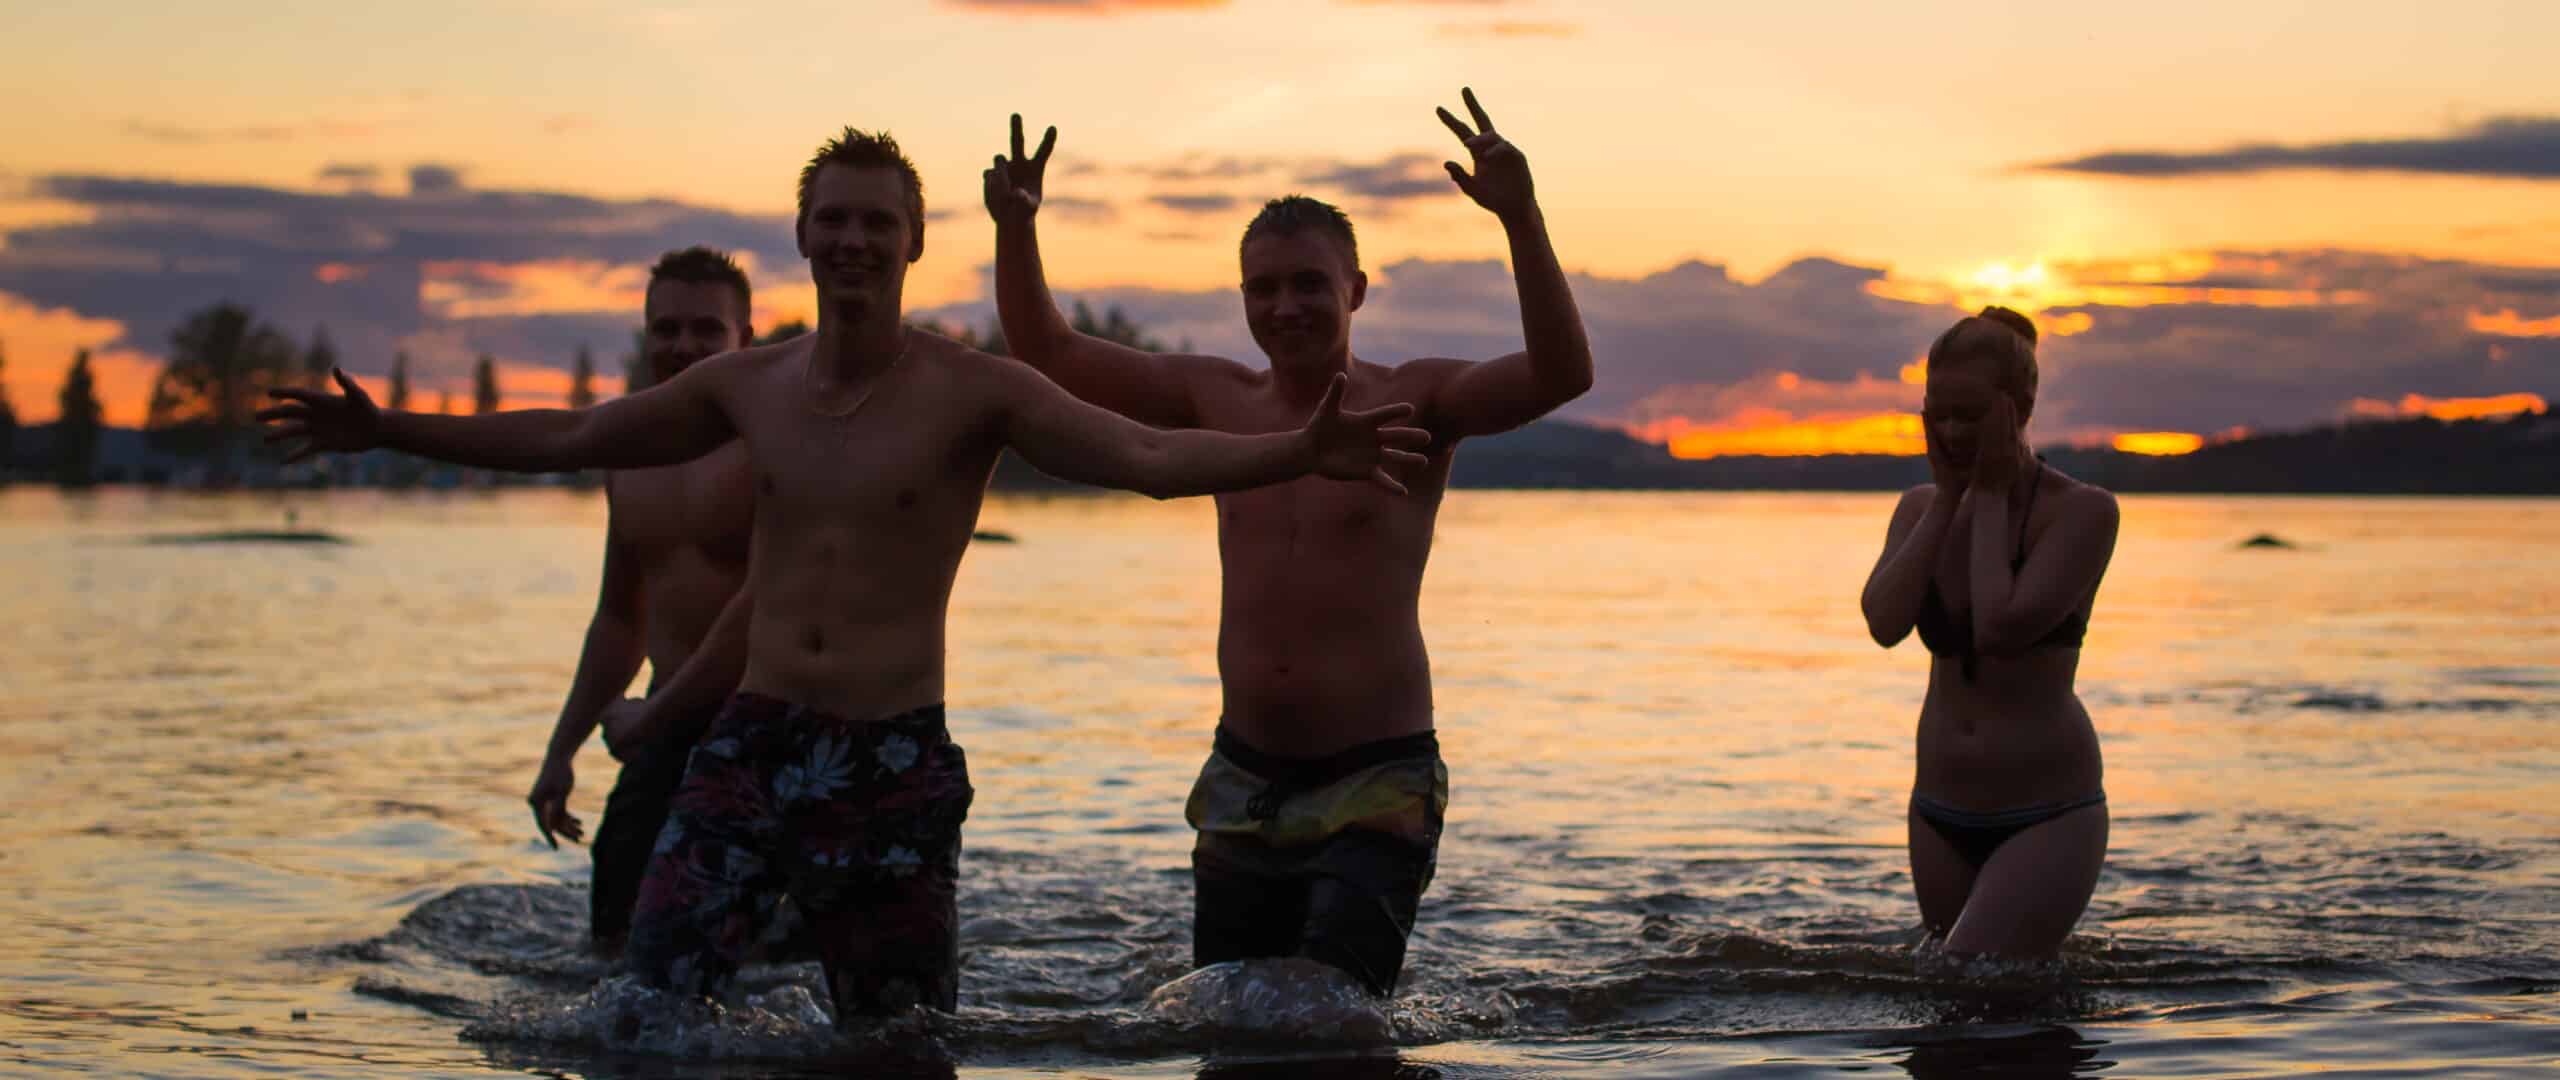 Lakeland Finland - Happy people swimming